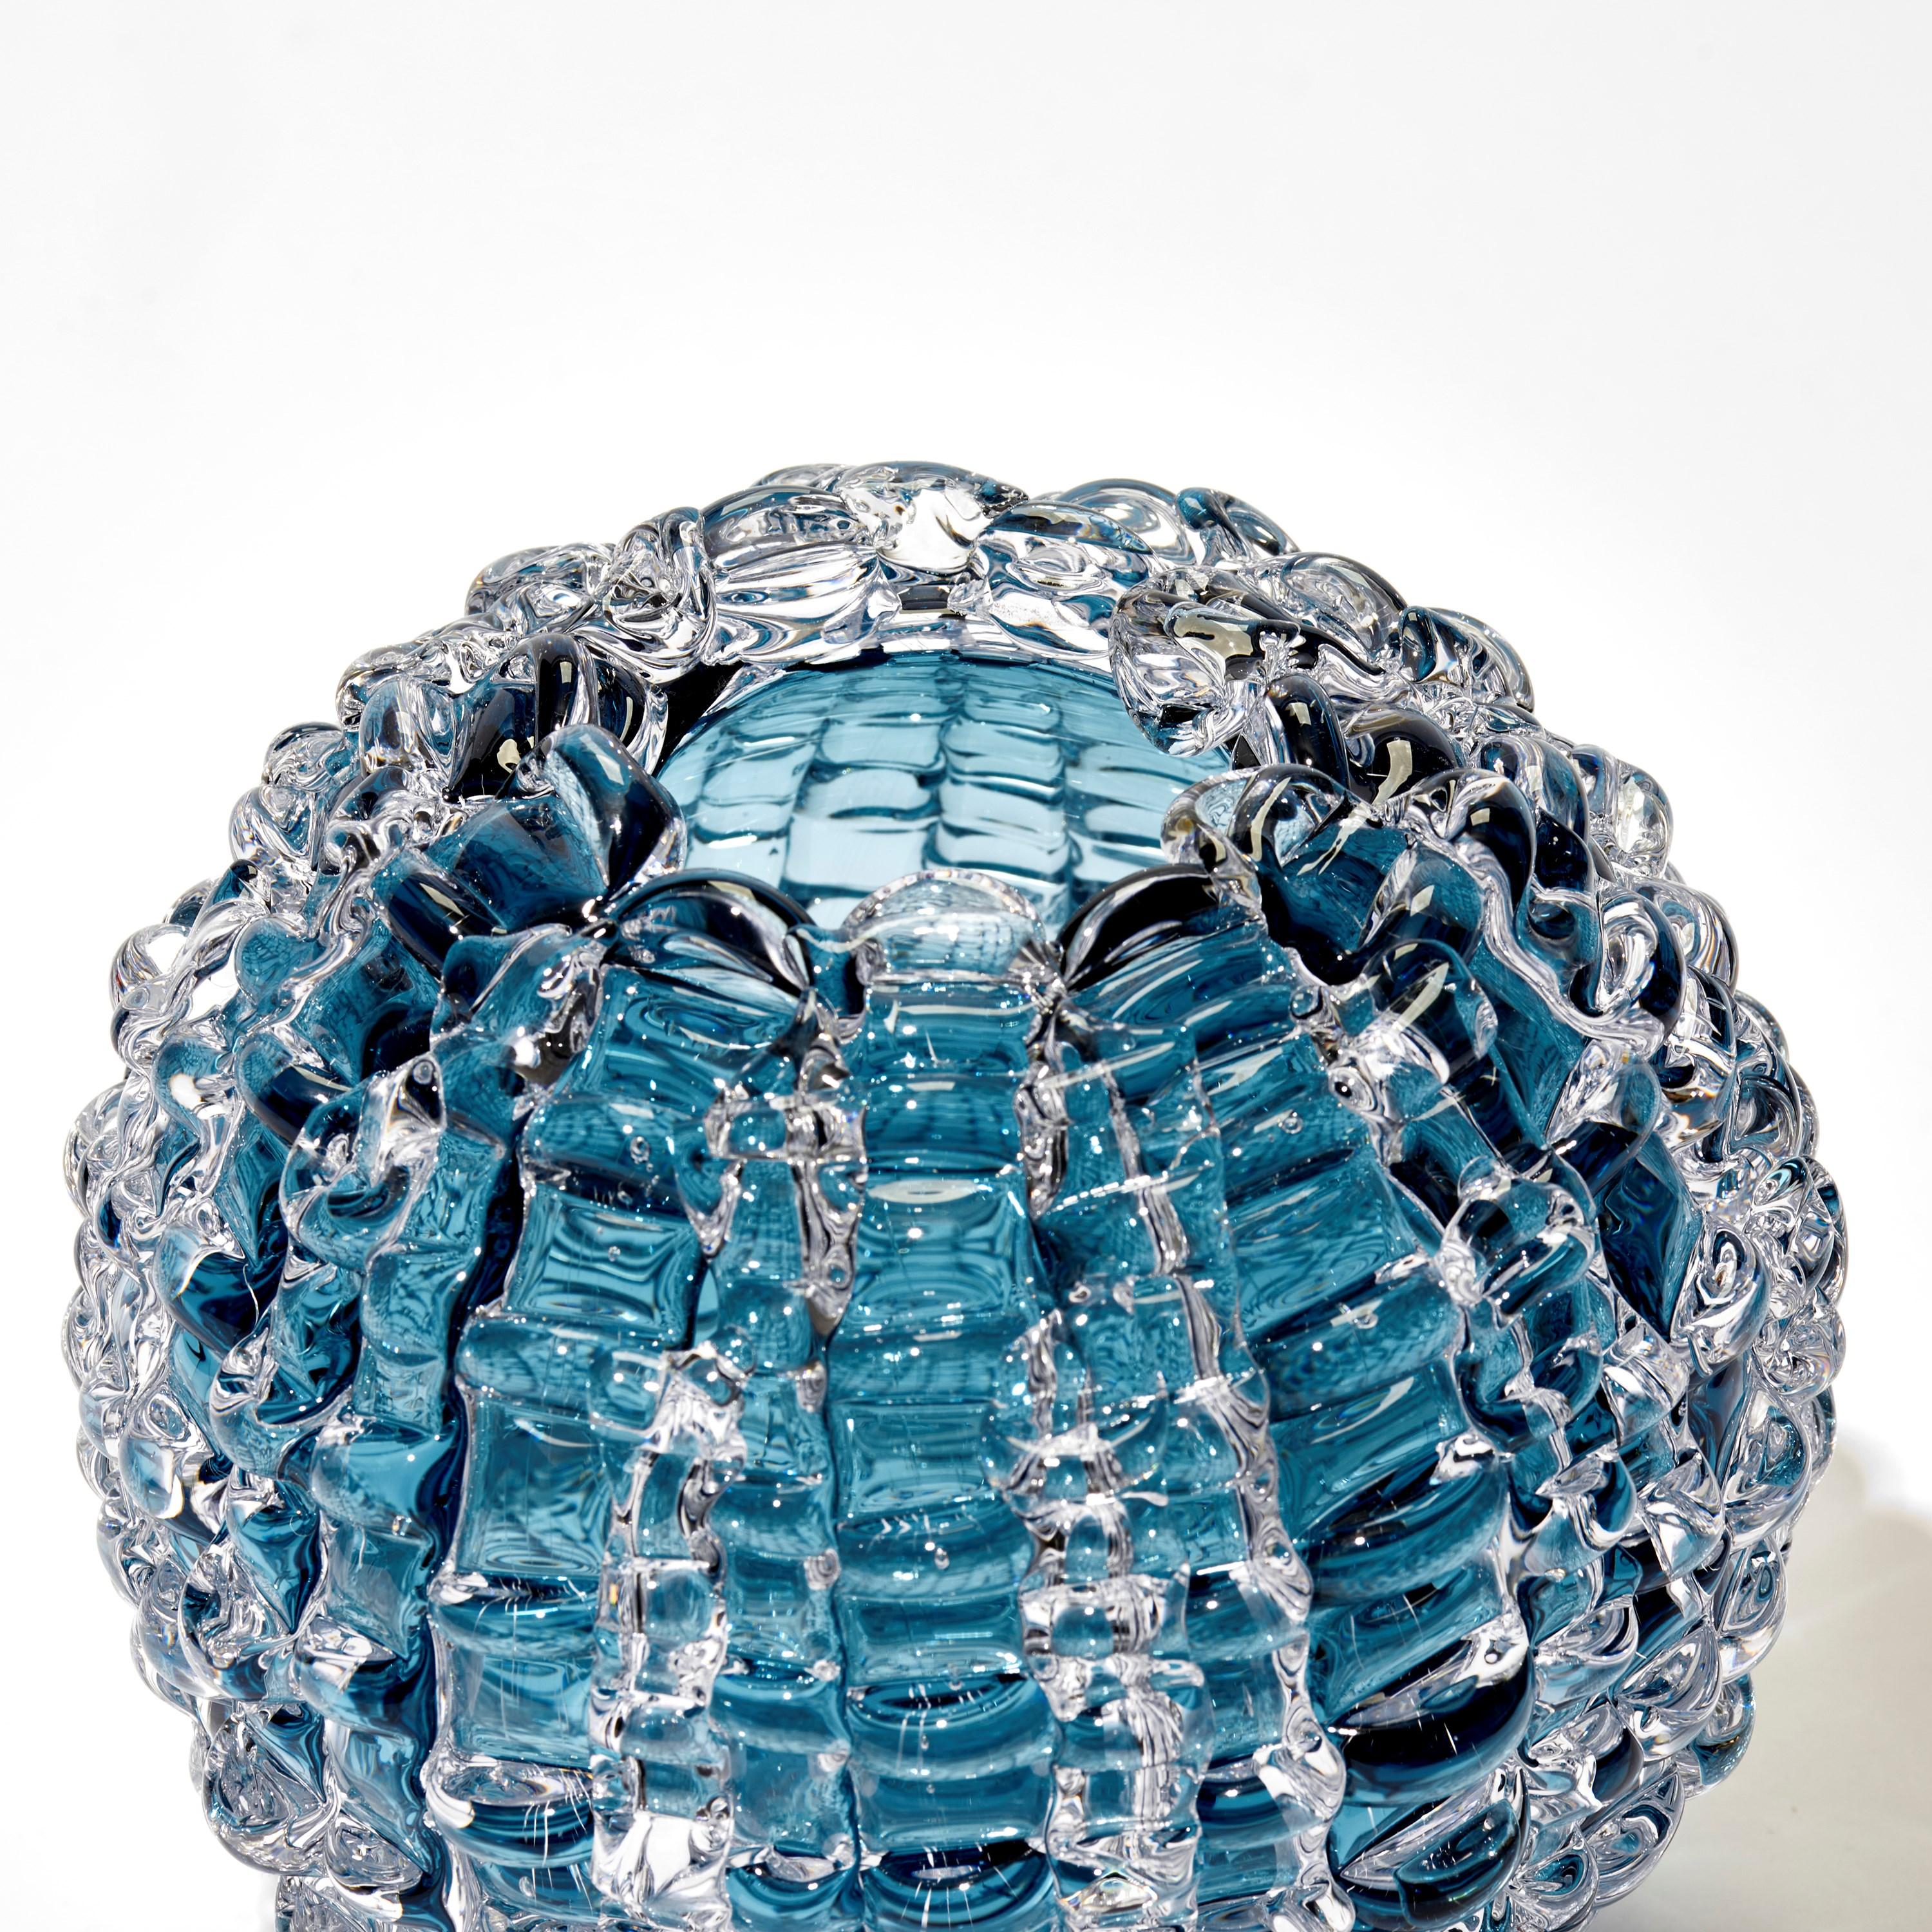 Organic Modern Echinus in Aqua, a Blue Glass Centrepiece & Sculpture by Katherine Huskie